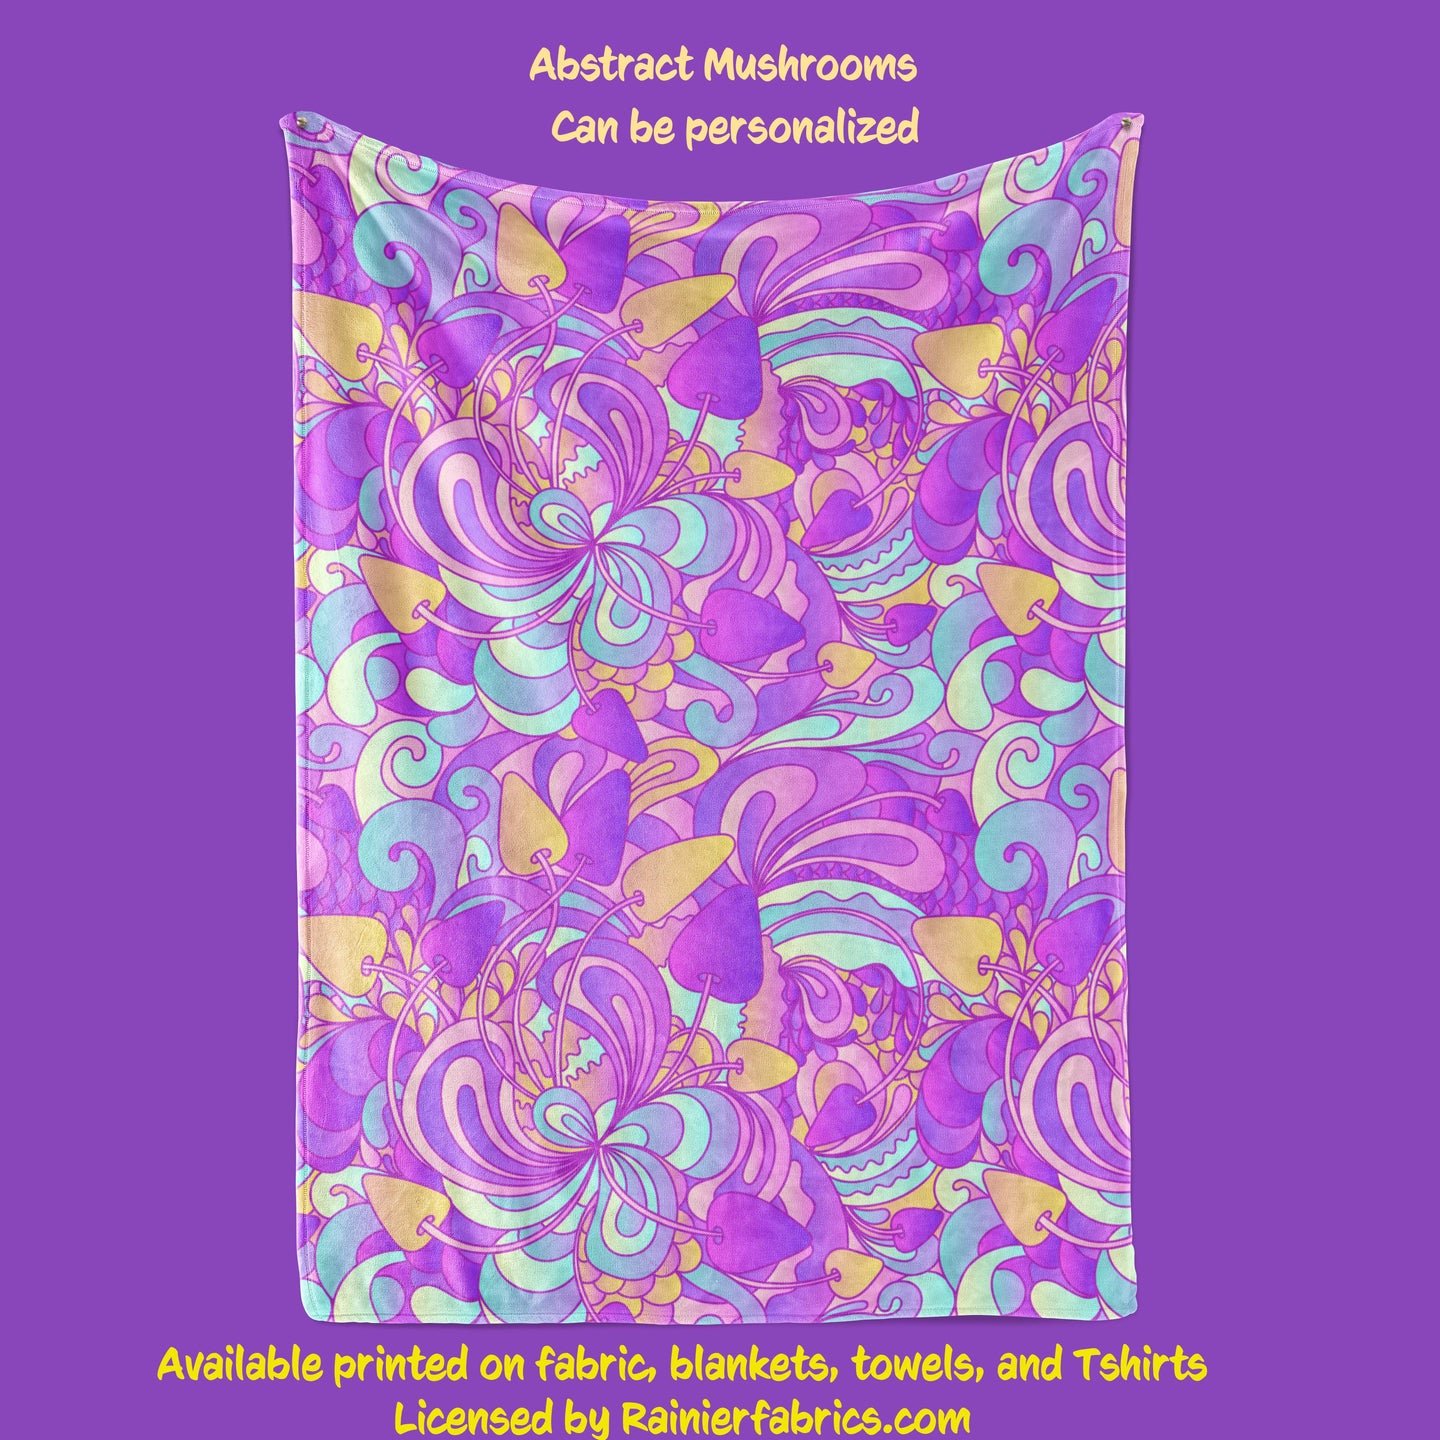 Abstract Mushroom Blanket